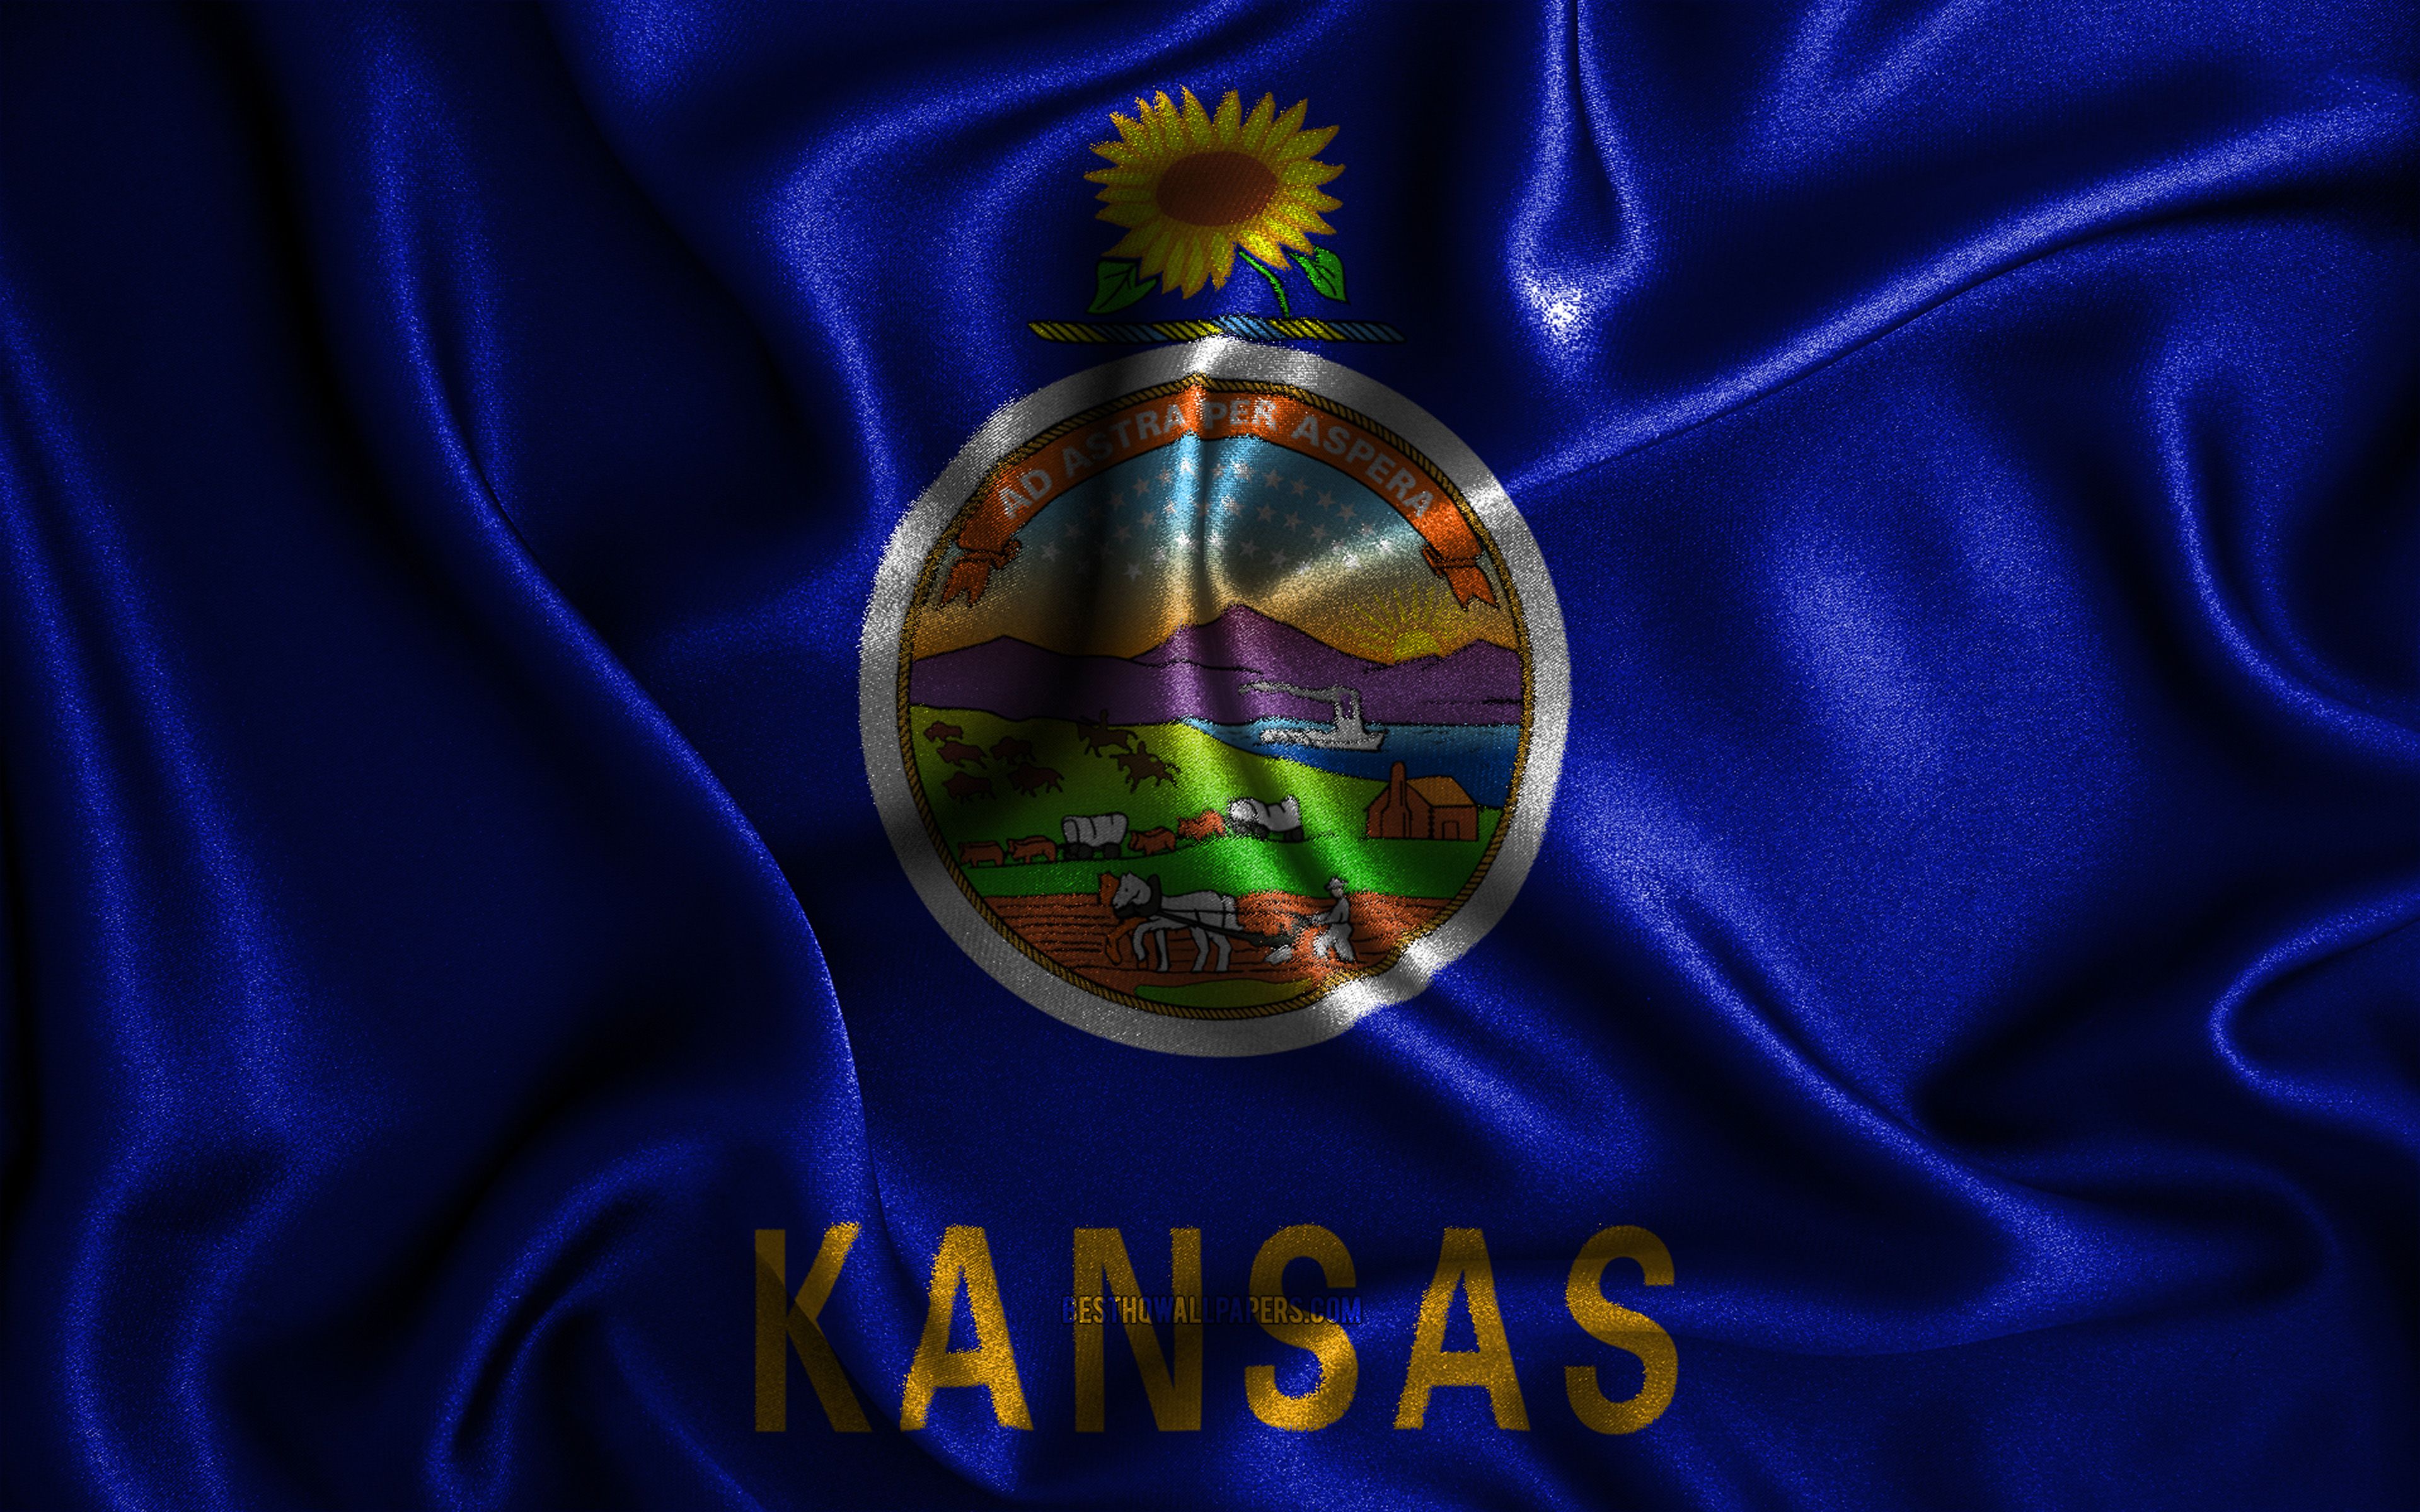 Download wallpaper Kansas flag, 4k, silk wavy flags, american states, USA, Flag of Kansas, fabric flags, 3D art, Kansas, United States of America, Kansas 3D flag, US states for desktop with resolution